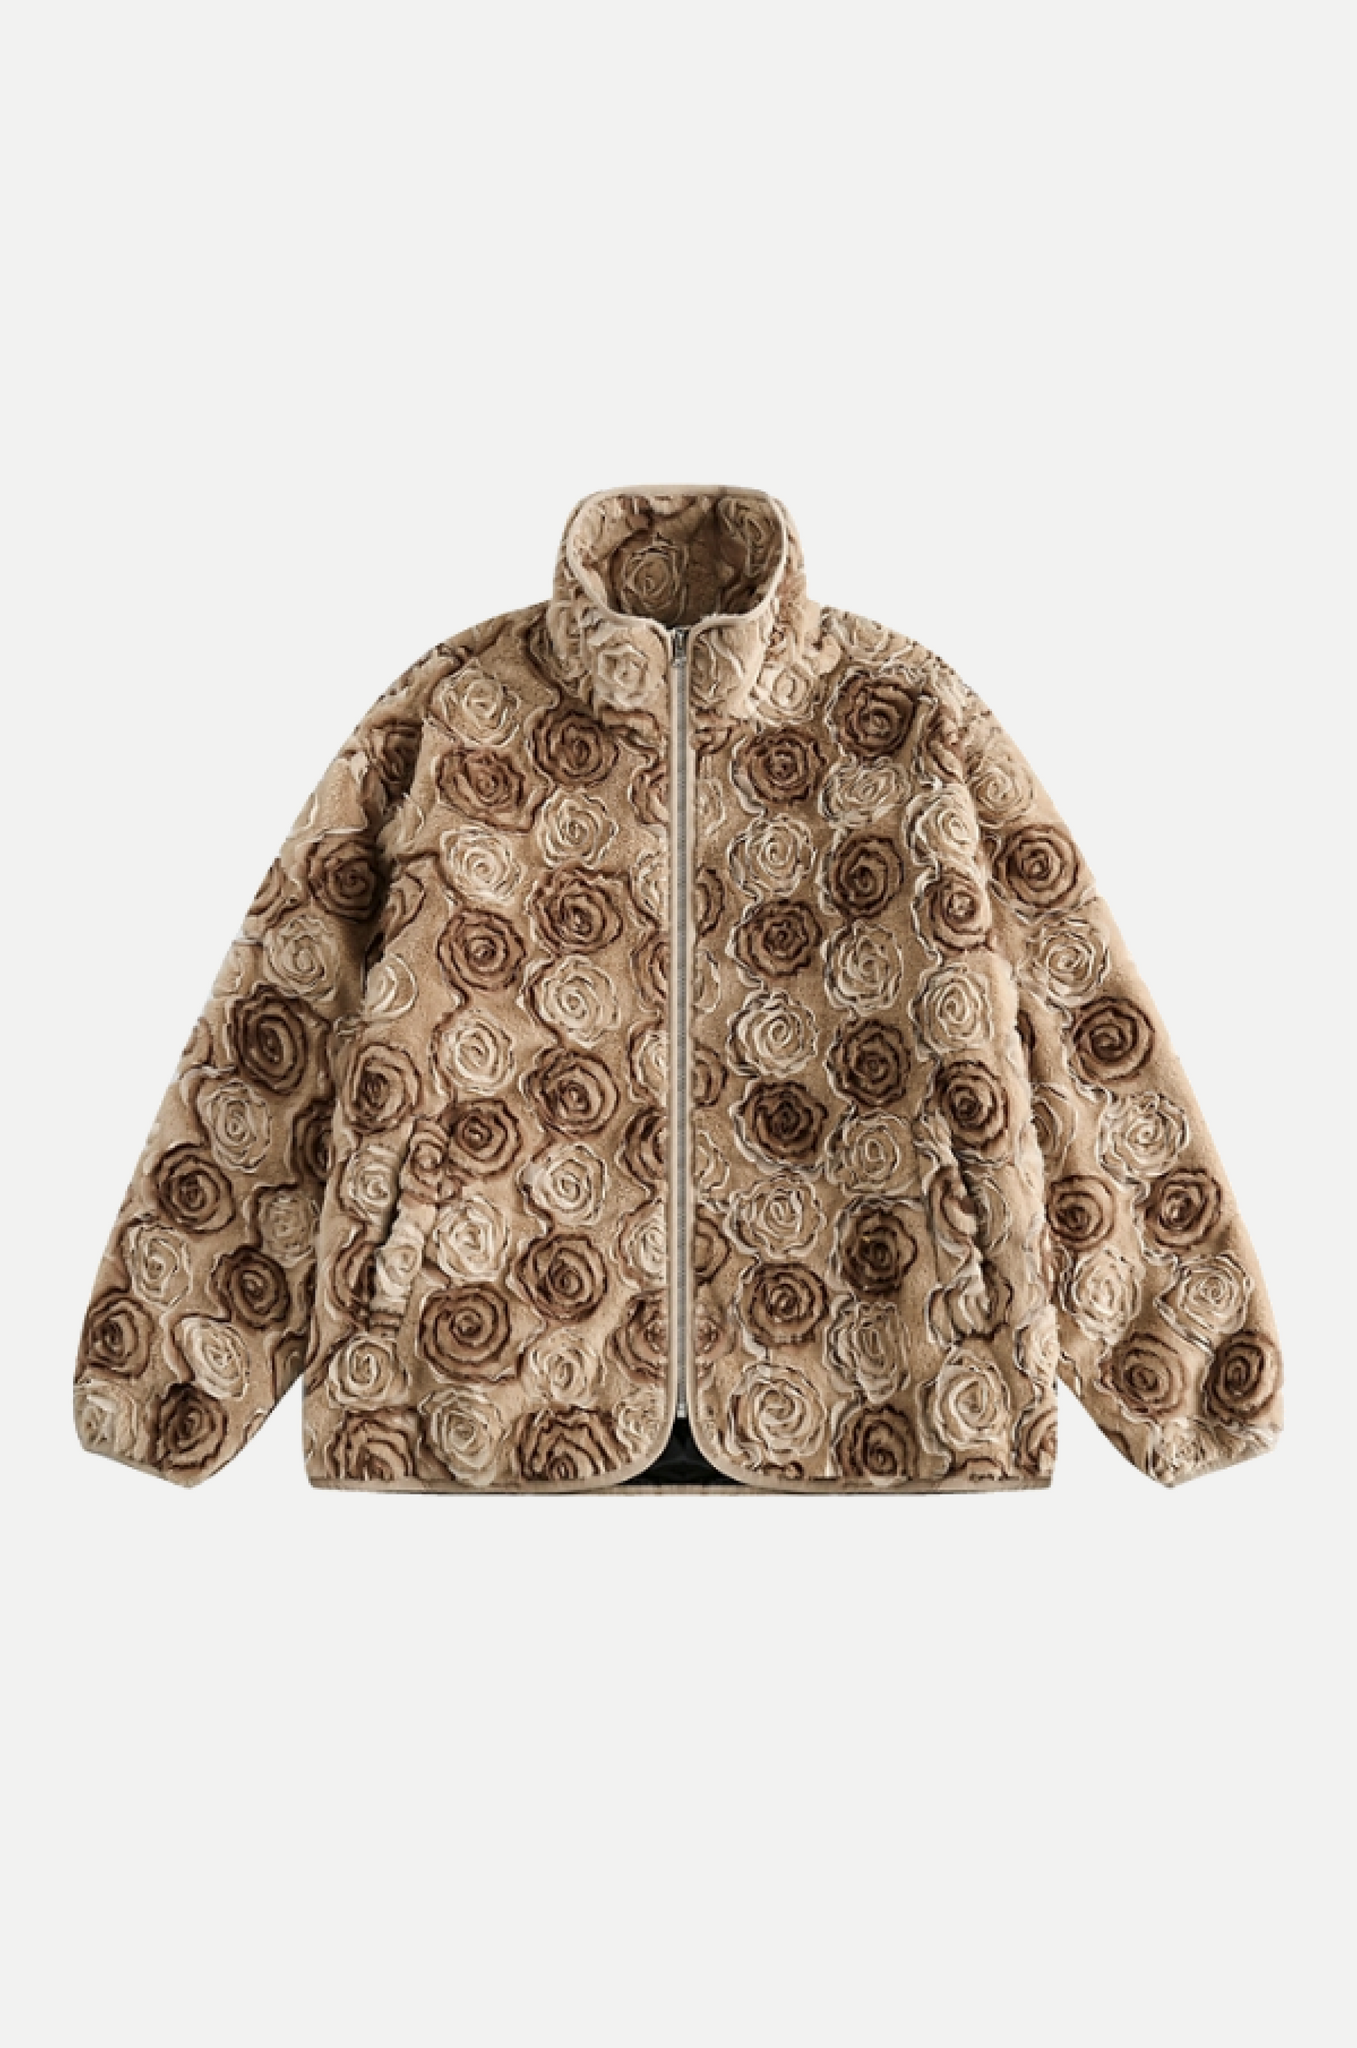 Rose Pattern Faux Fur Jacket